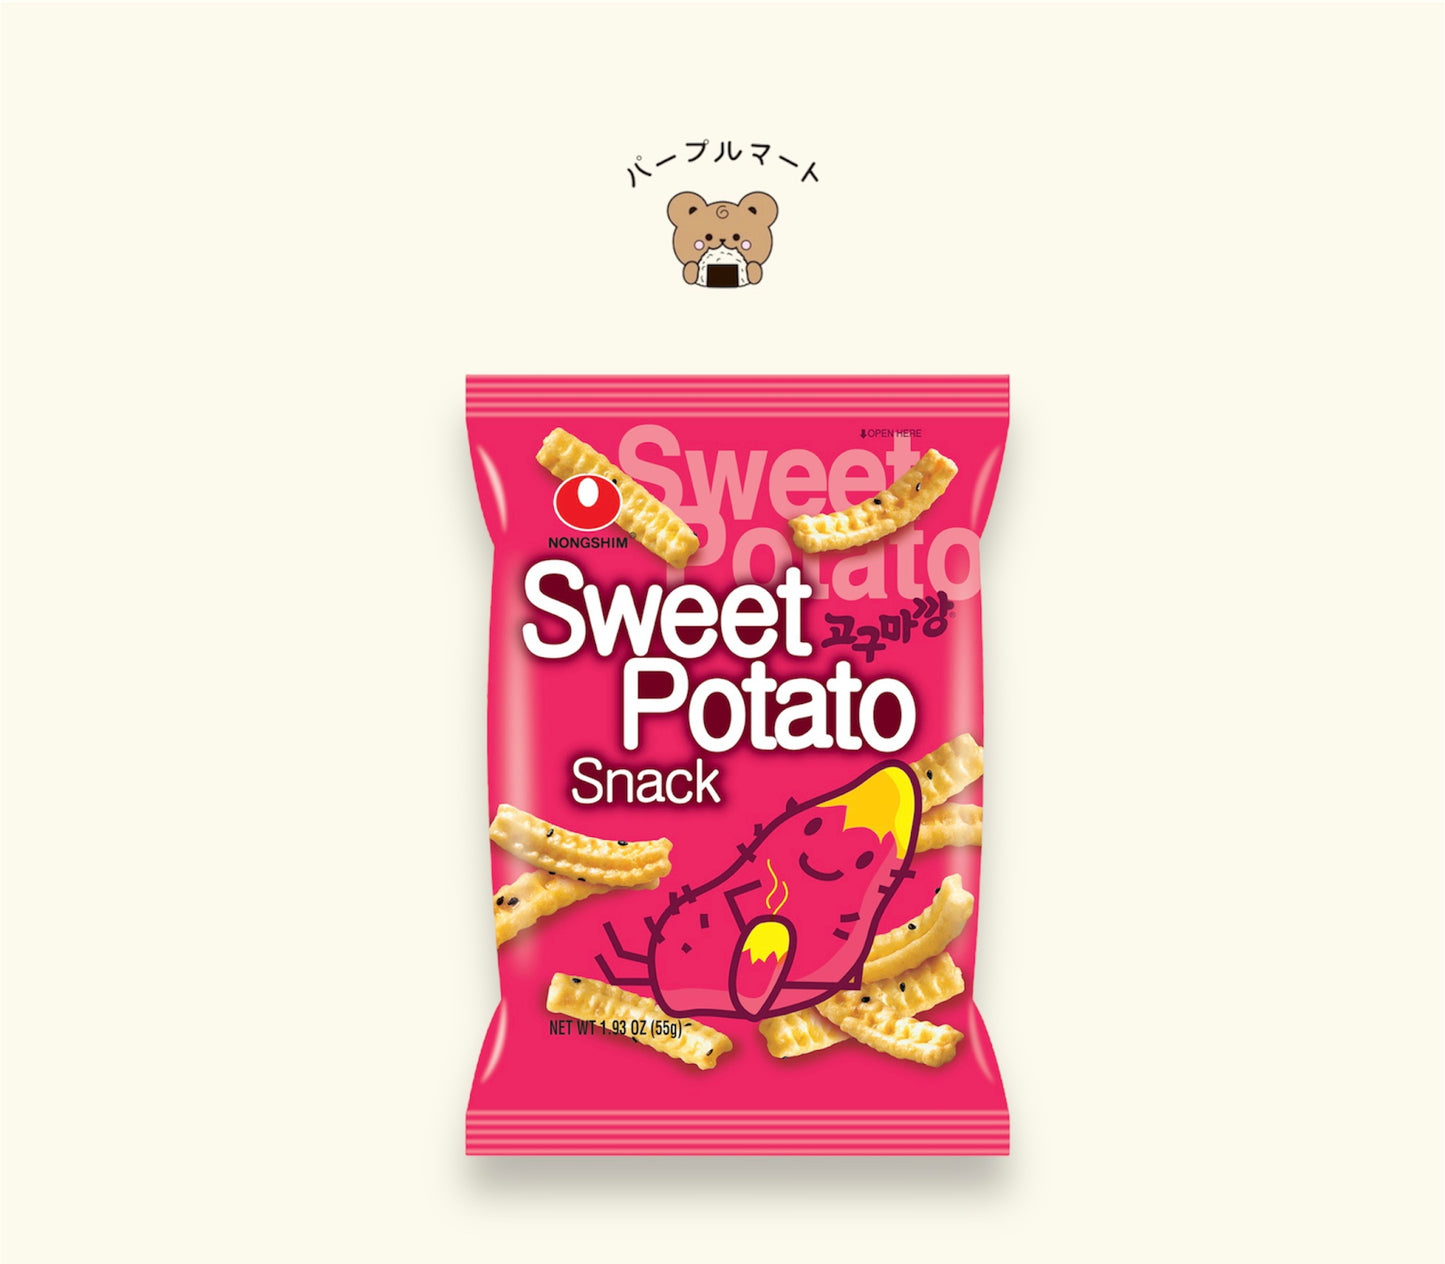 Nongshim Sweet Potato Snack